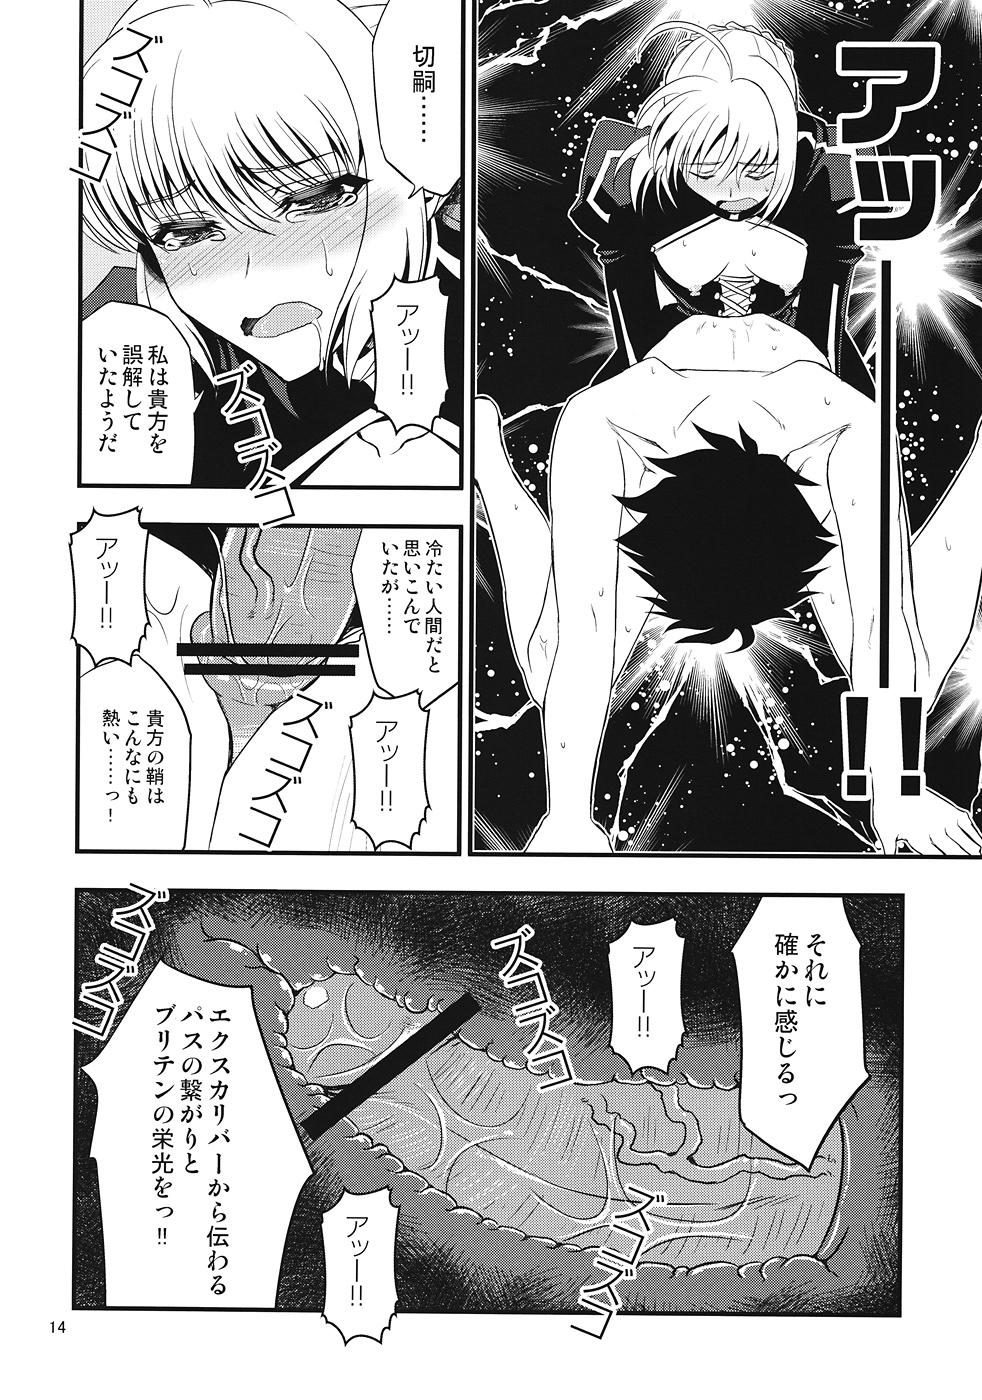 (C82) [SKUG (BUSHI)] セイバーにち●こが生える本 (Fate/zero)